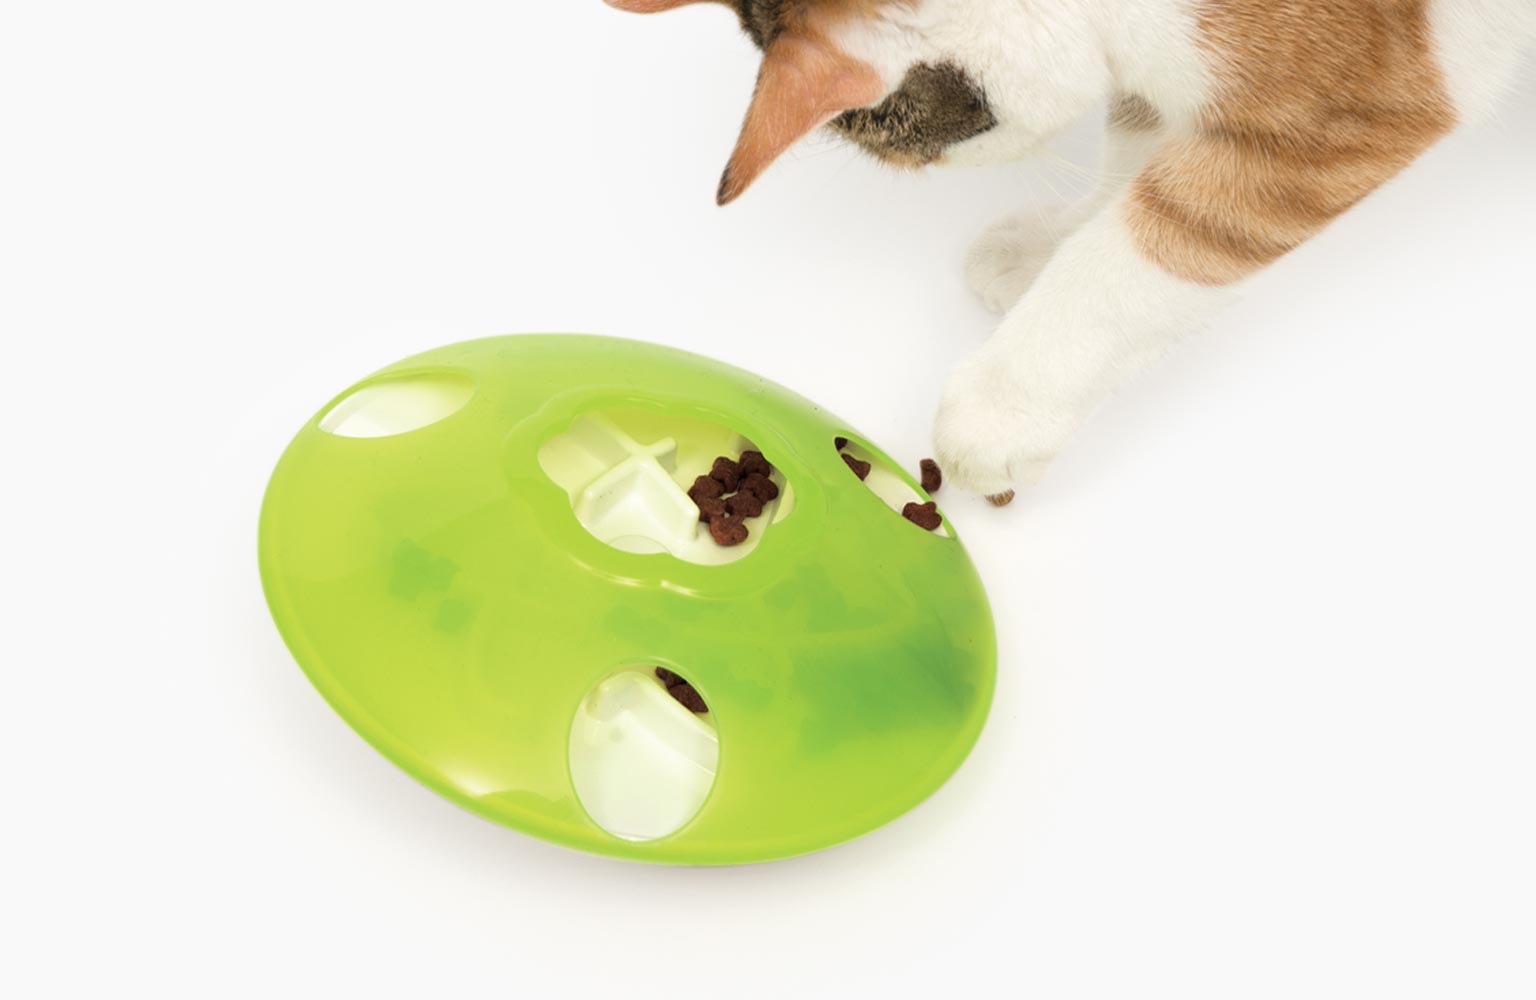 Catit Design Senses Food Maze Interactive Cat Feeder and Toy 